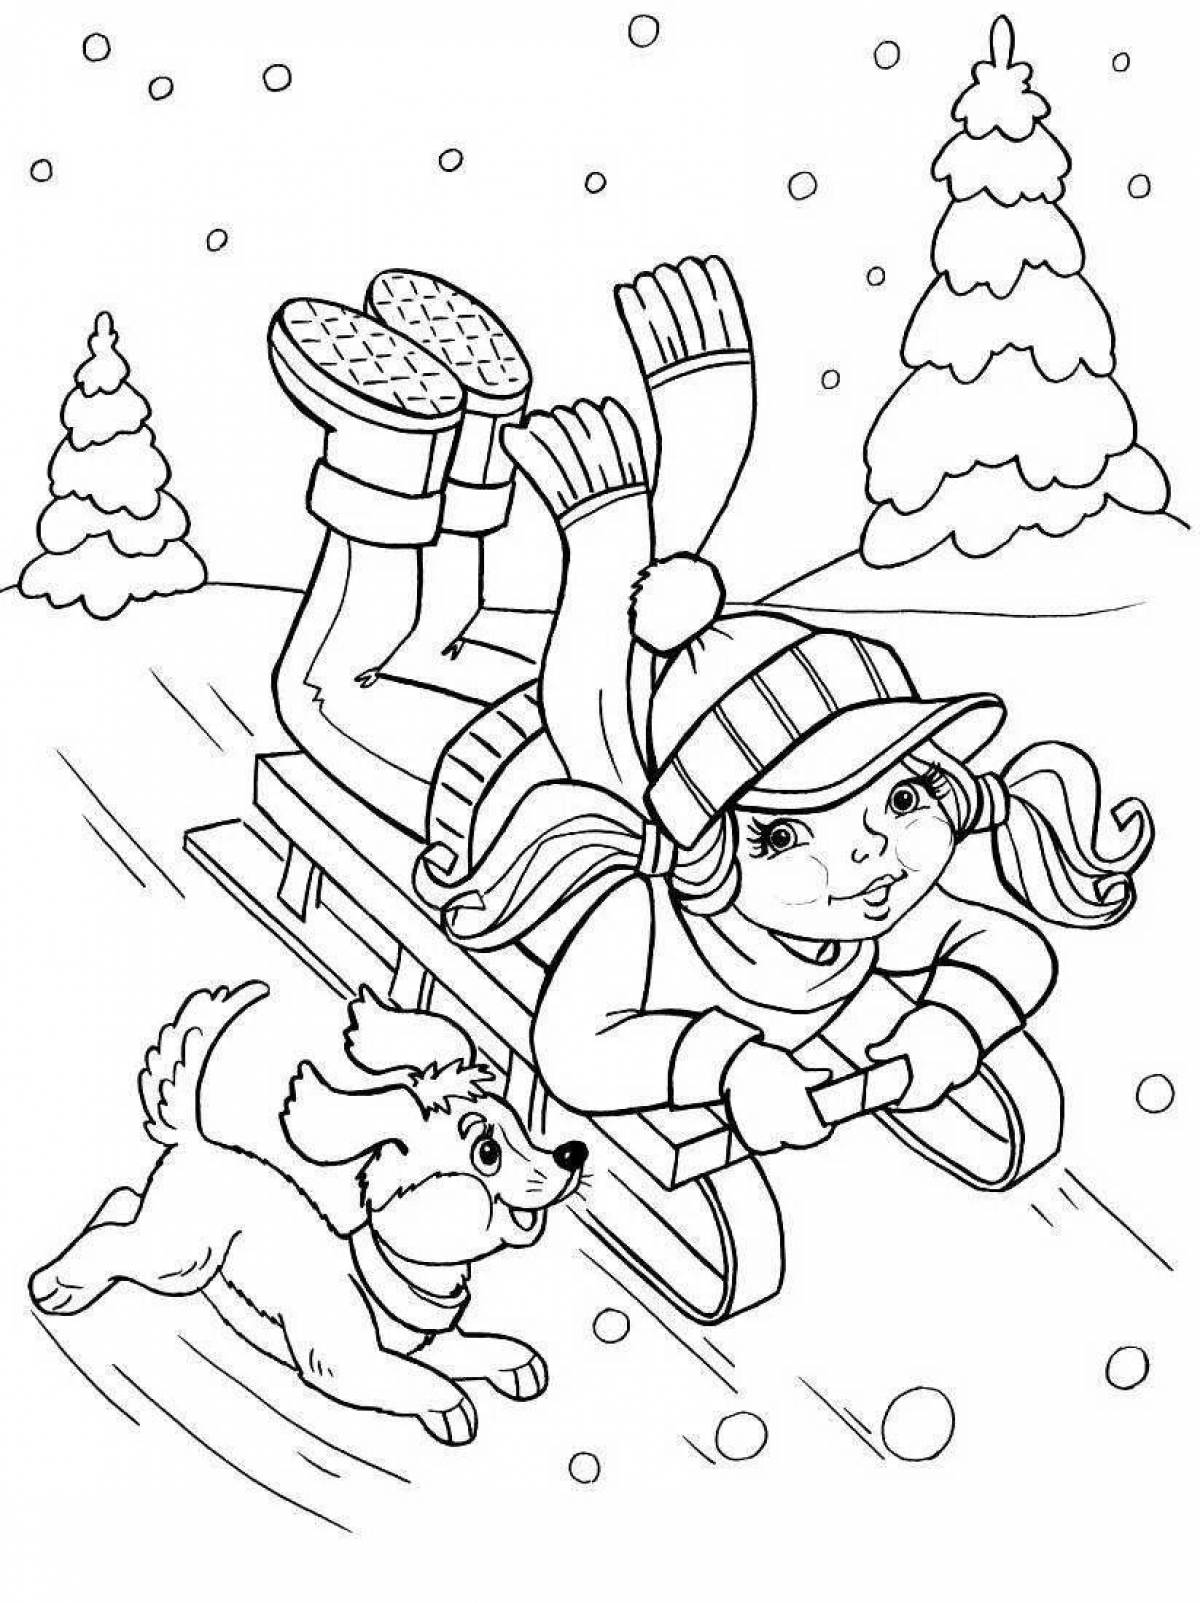 Charming winter fun coloring book